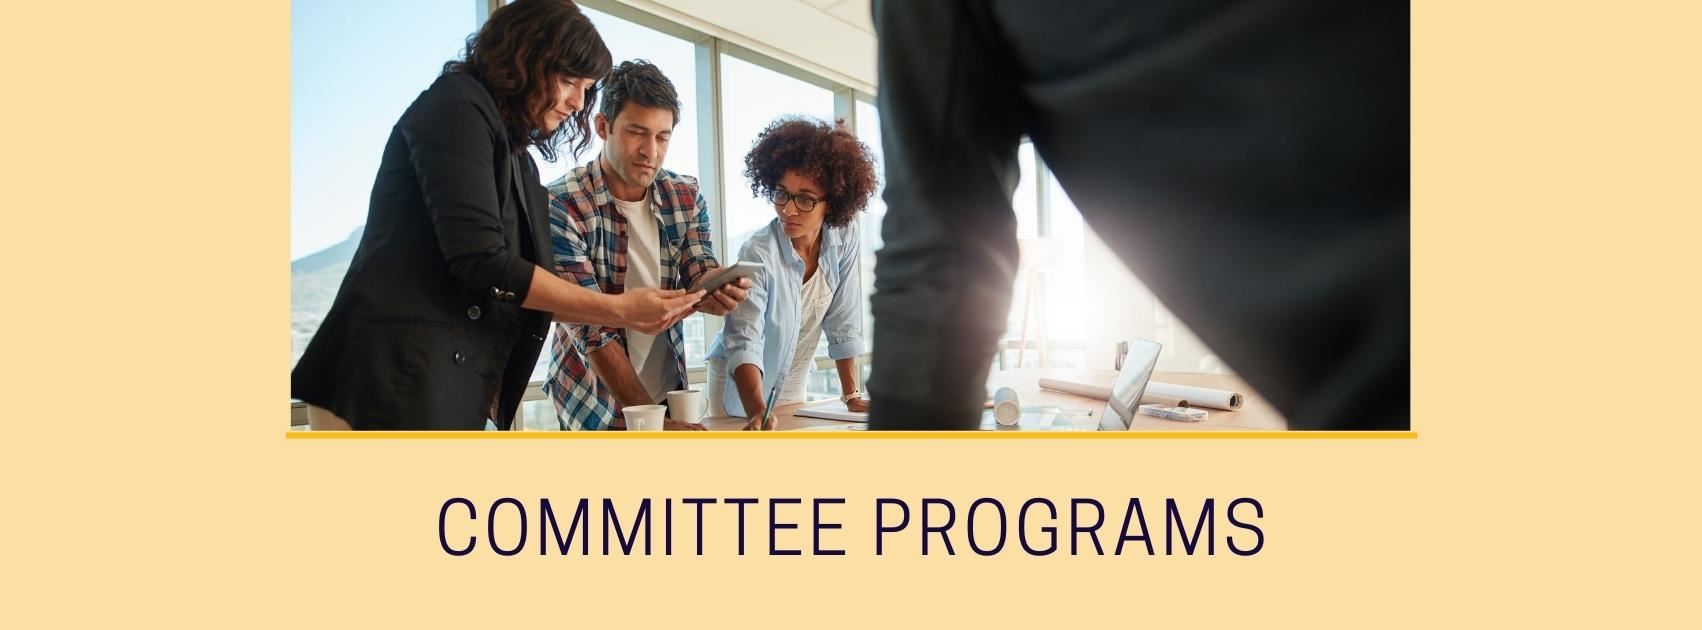 NFBPWC programs run by committee.